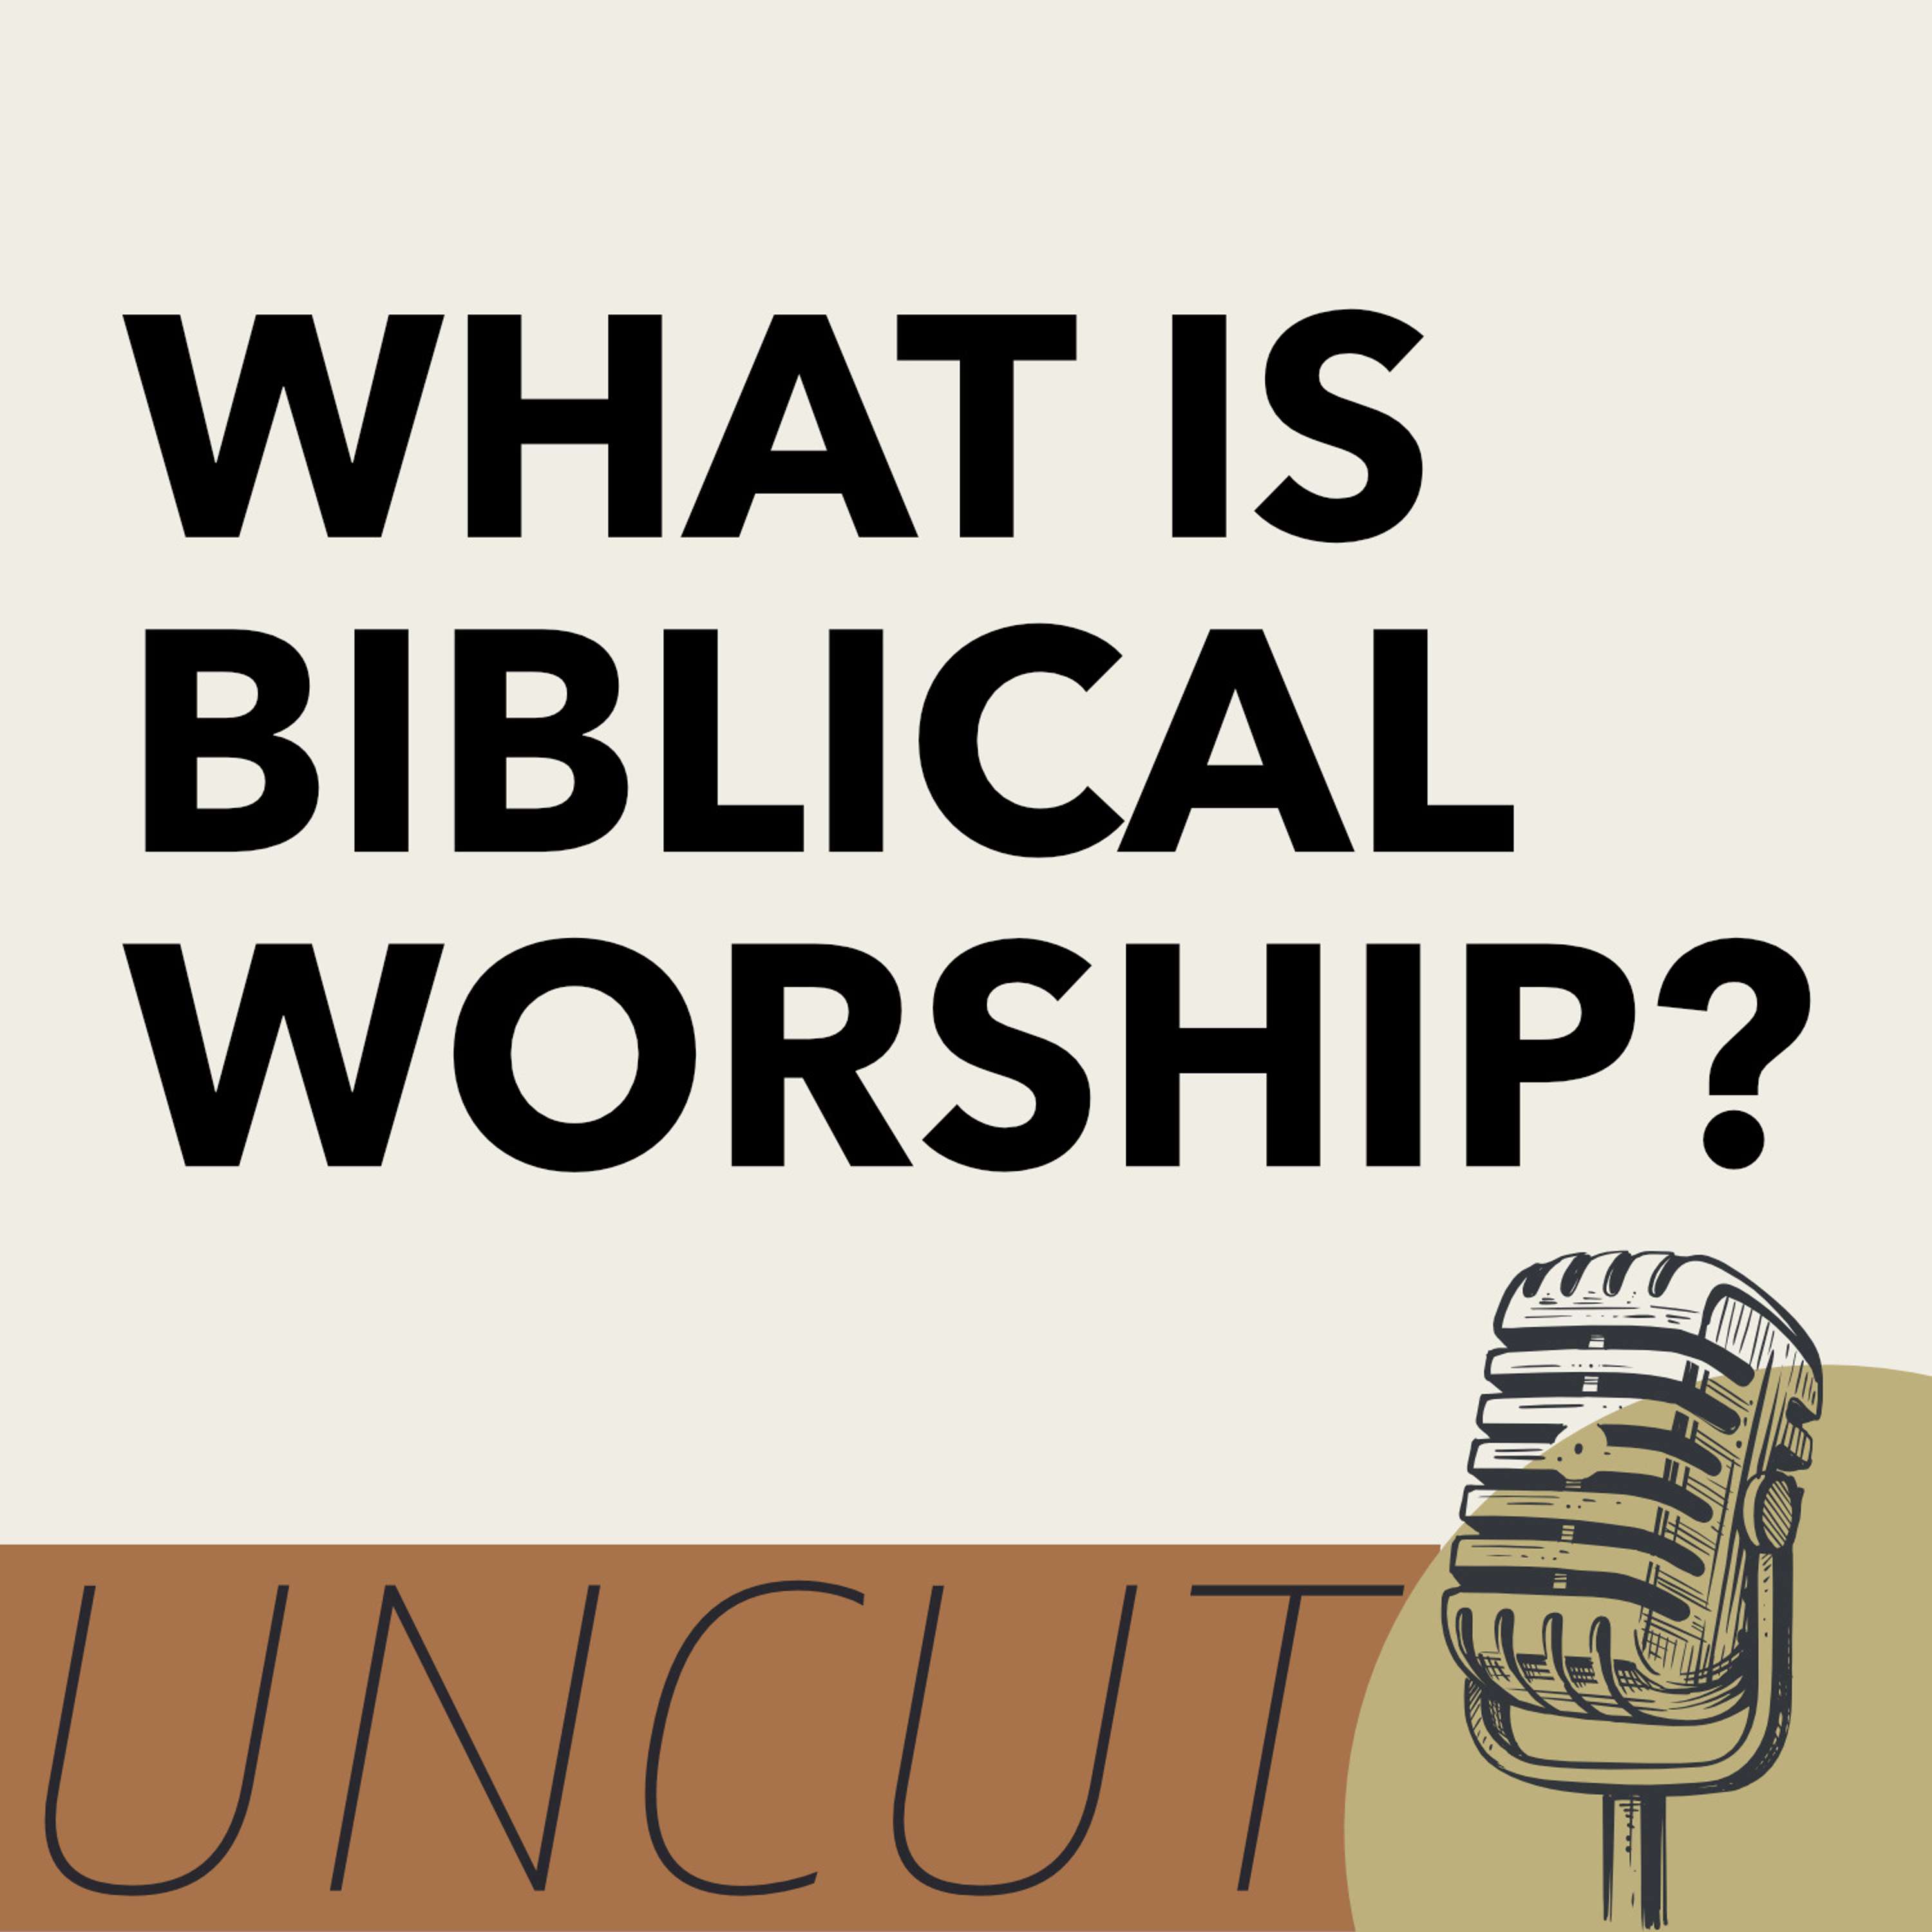 What is biblical worship?